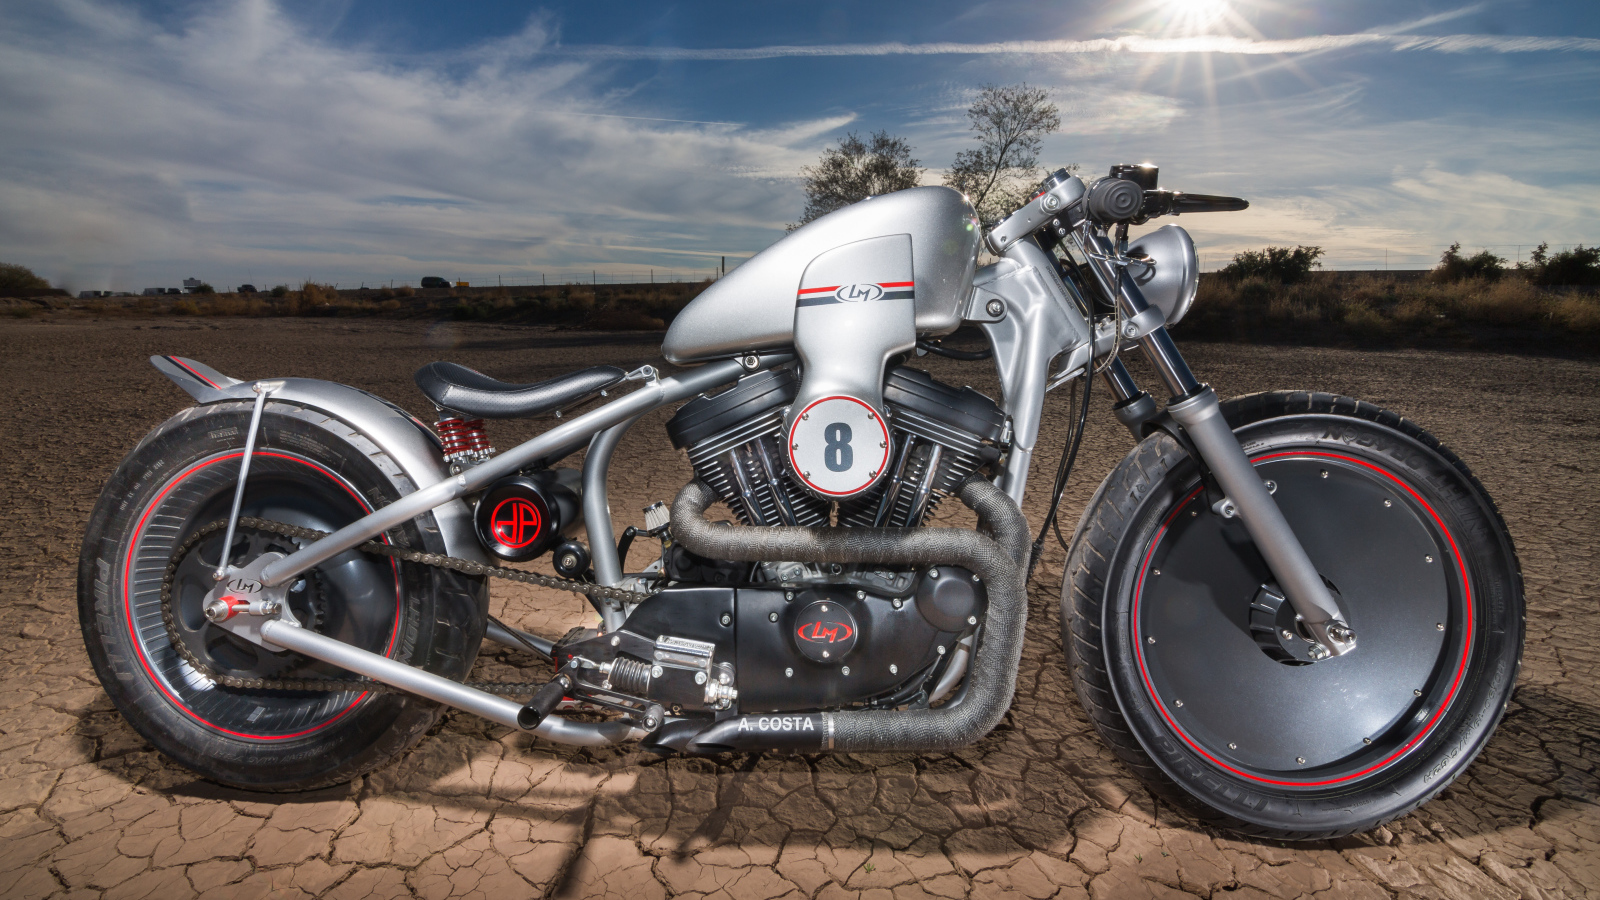 Мотоцикл Harley-Davidson стоит на земле под палящим солнцем 